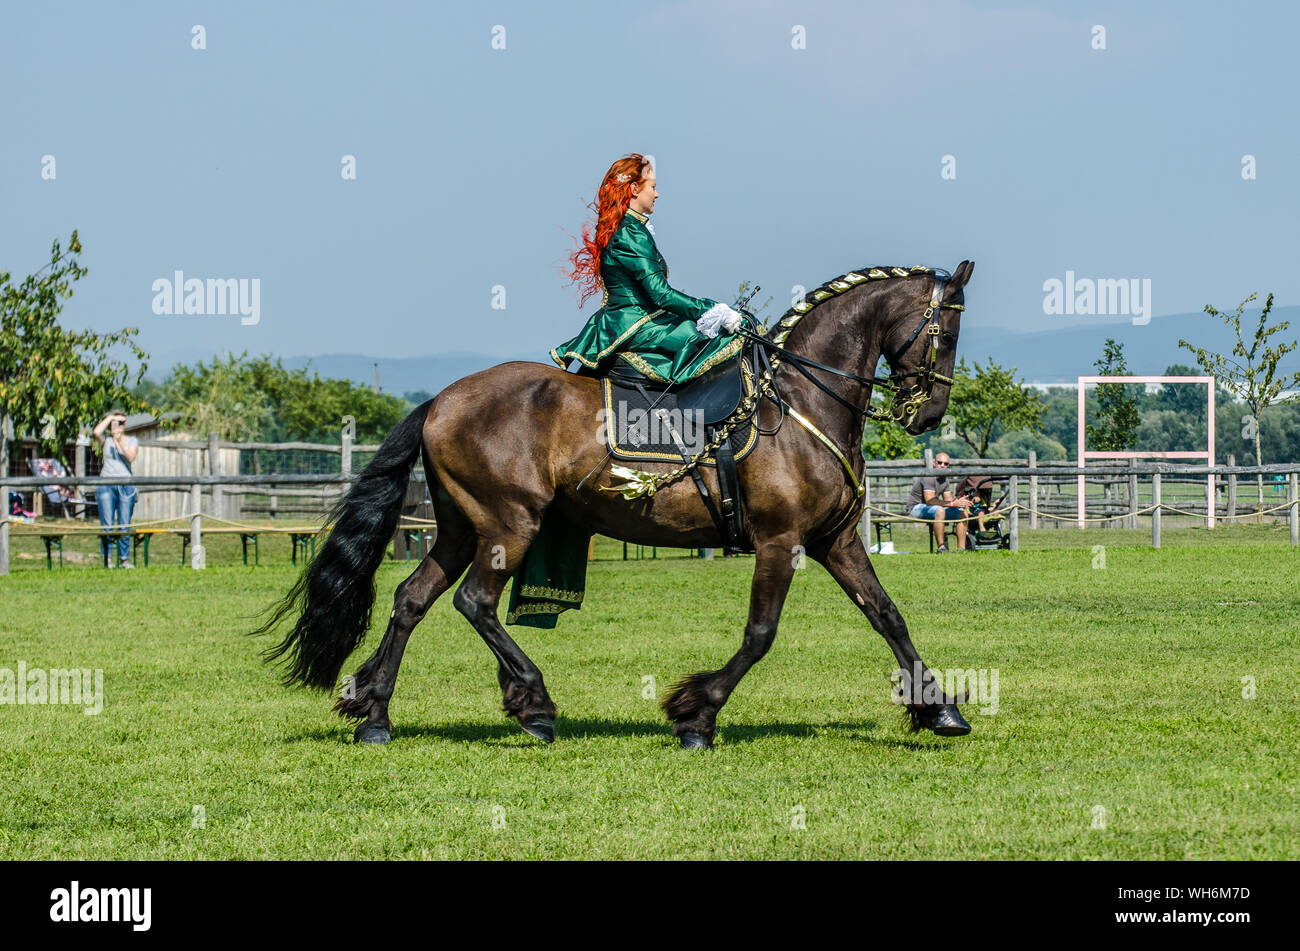 Schloss Hof Großes Pferdefest 2019 Great Equestrian Show at Schloss Hof Castle with two women riding on a side saddle Stock Photo